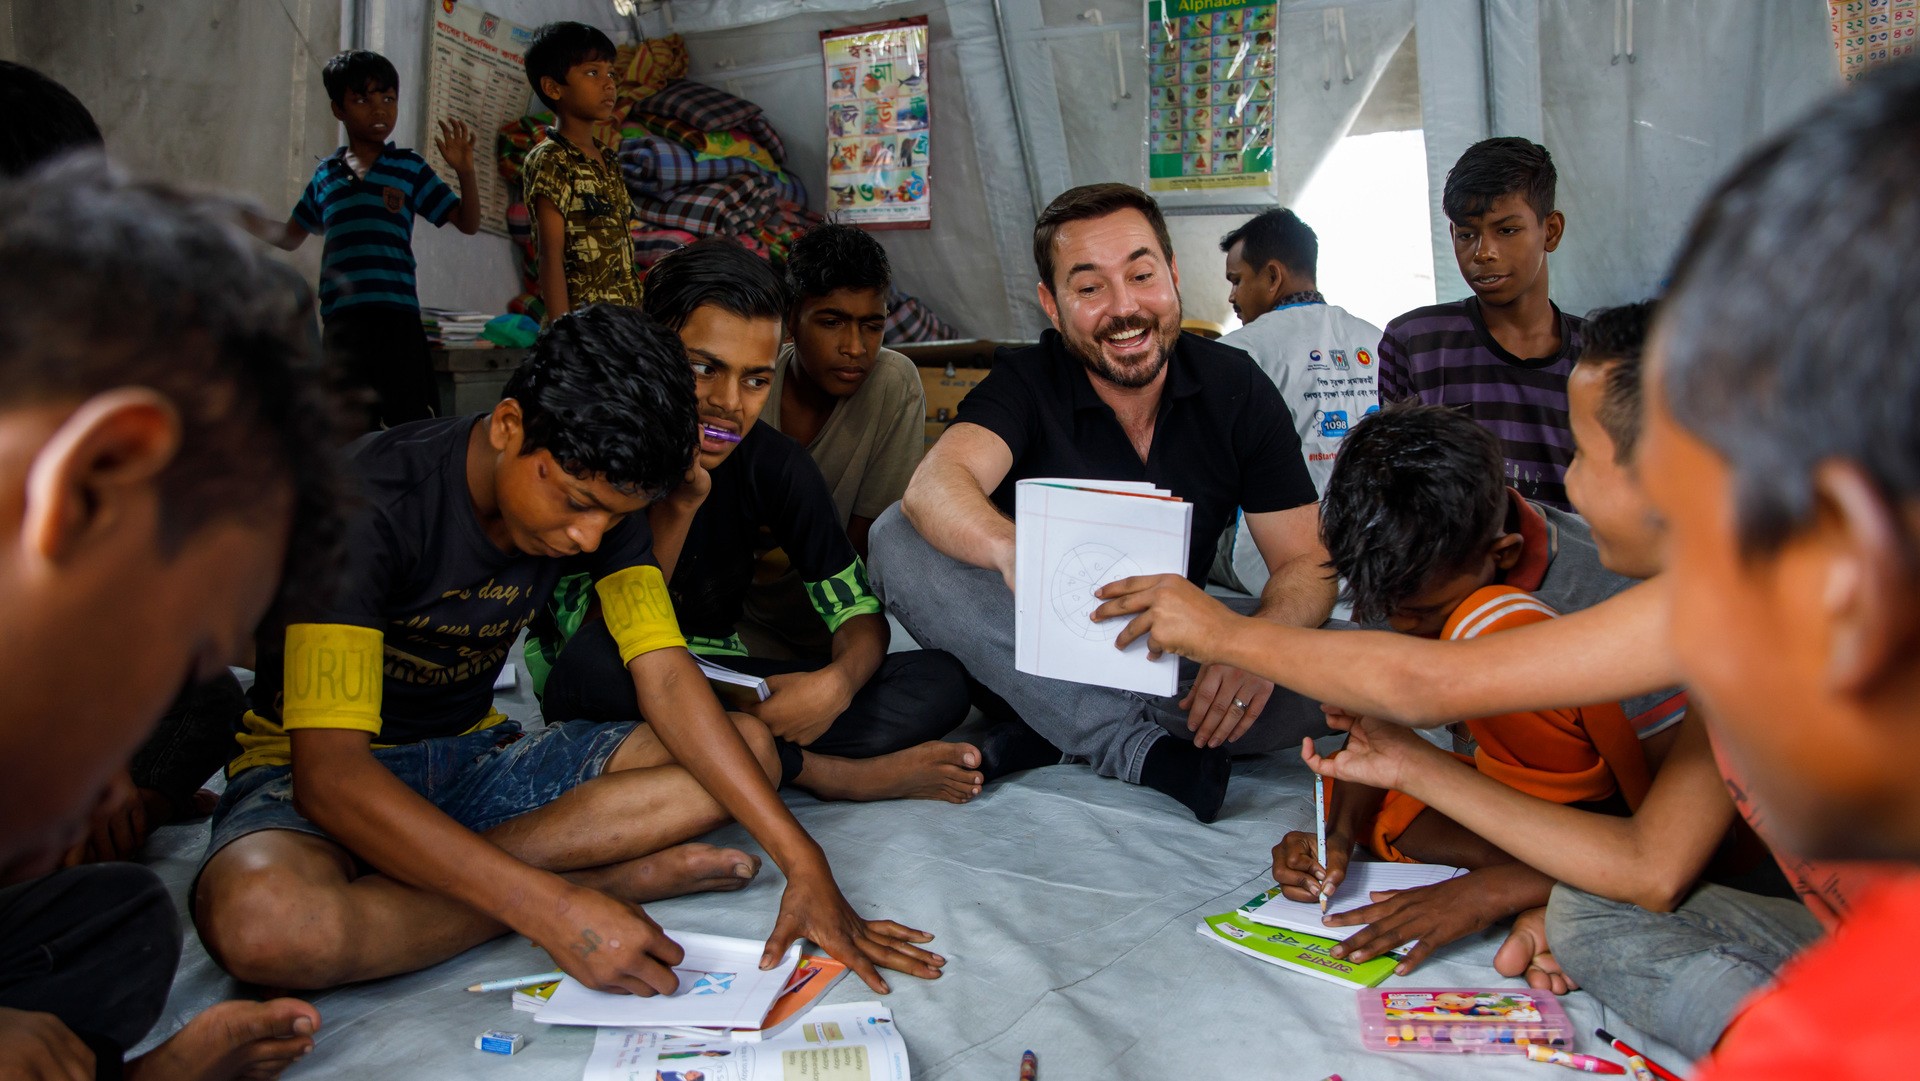 Actor Martin Compston plays games with Nirob, Hridoy and other children at Kamalapur Street Hub in Dhaka, Bangladesh. 